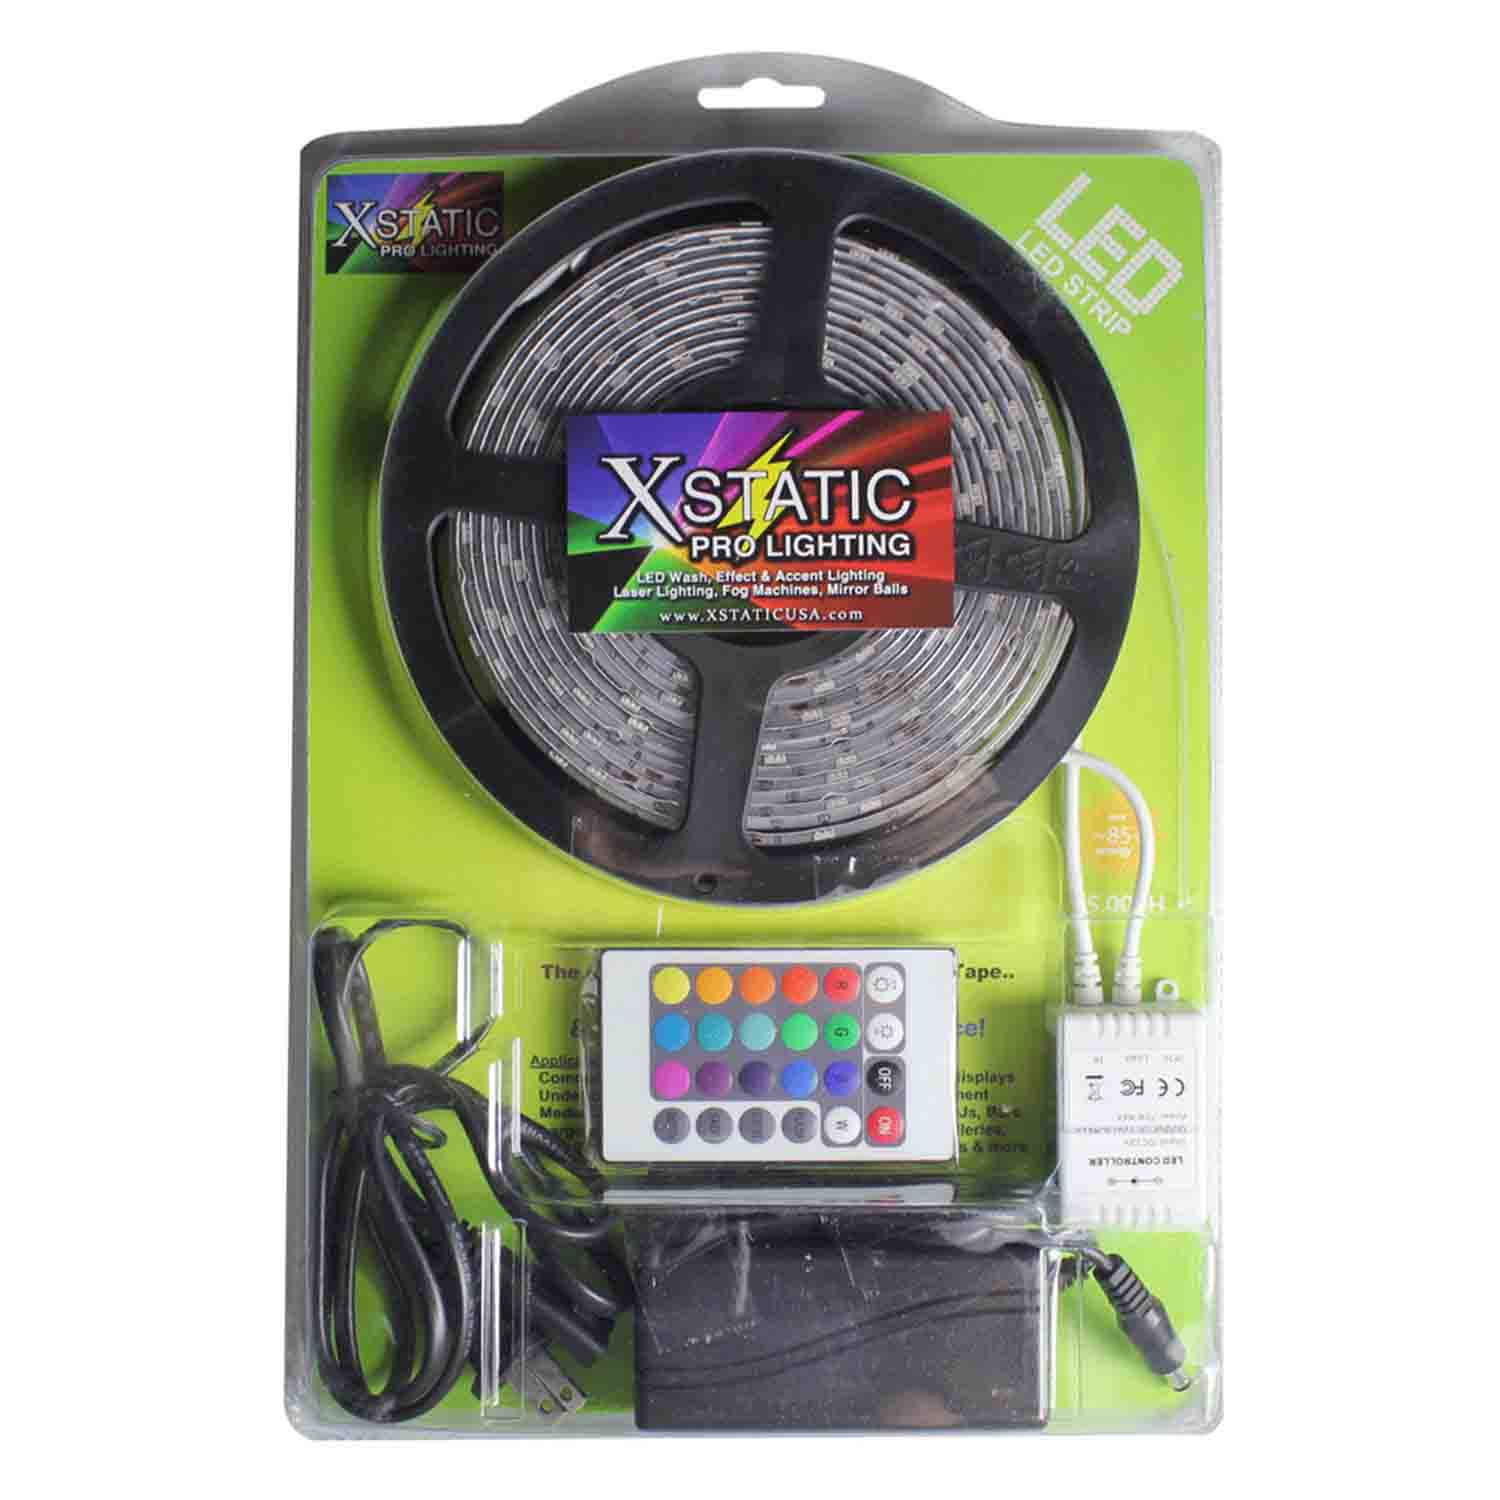 ProX X-S150RGB-KIT, Xstatic 150 RGB LED Strip kit with Remote Control and Power Supply - 16.5 Feet - Hollywood DJ